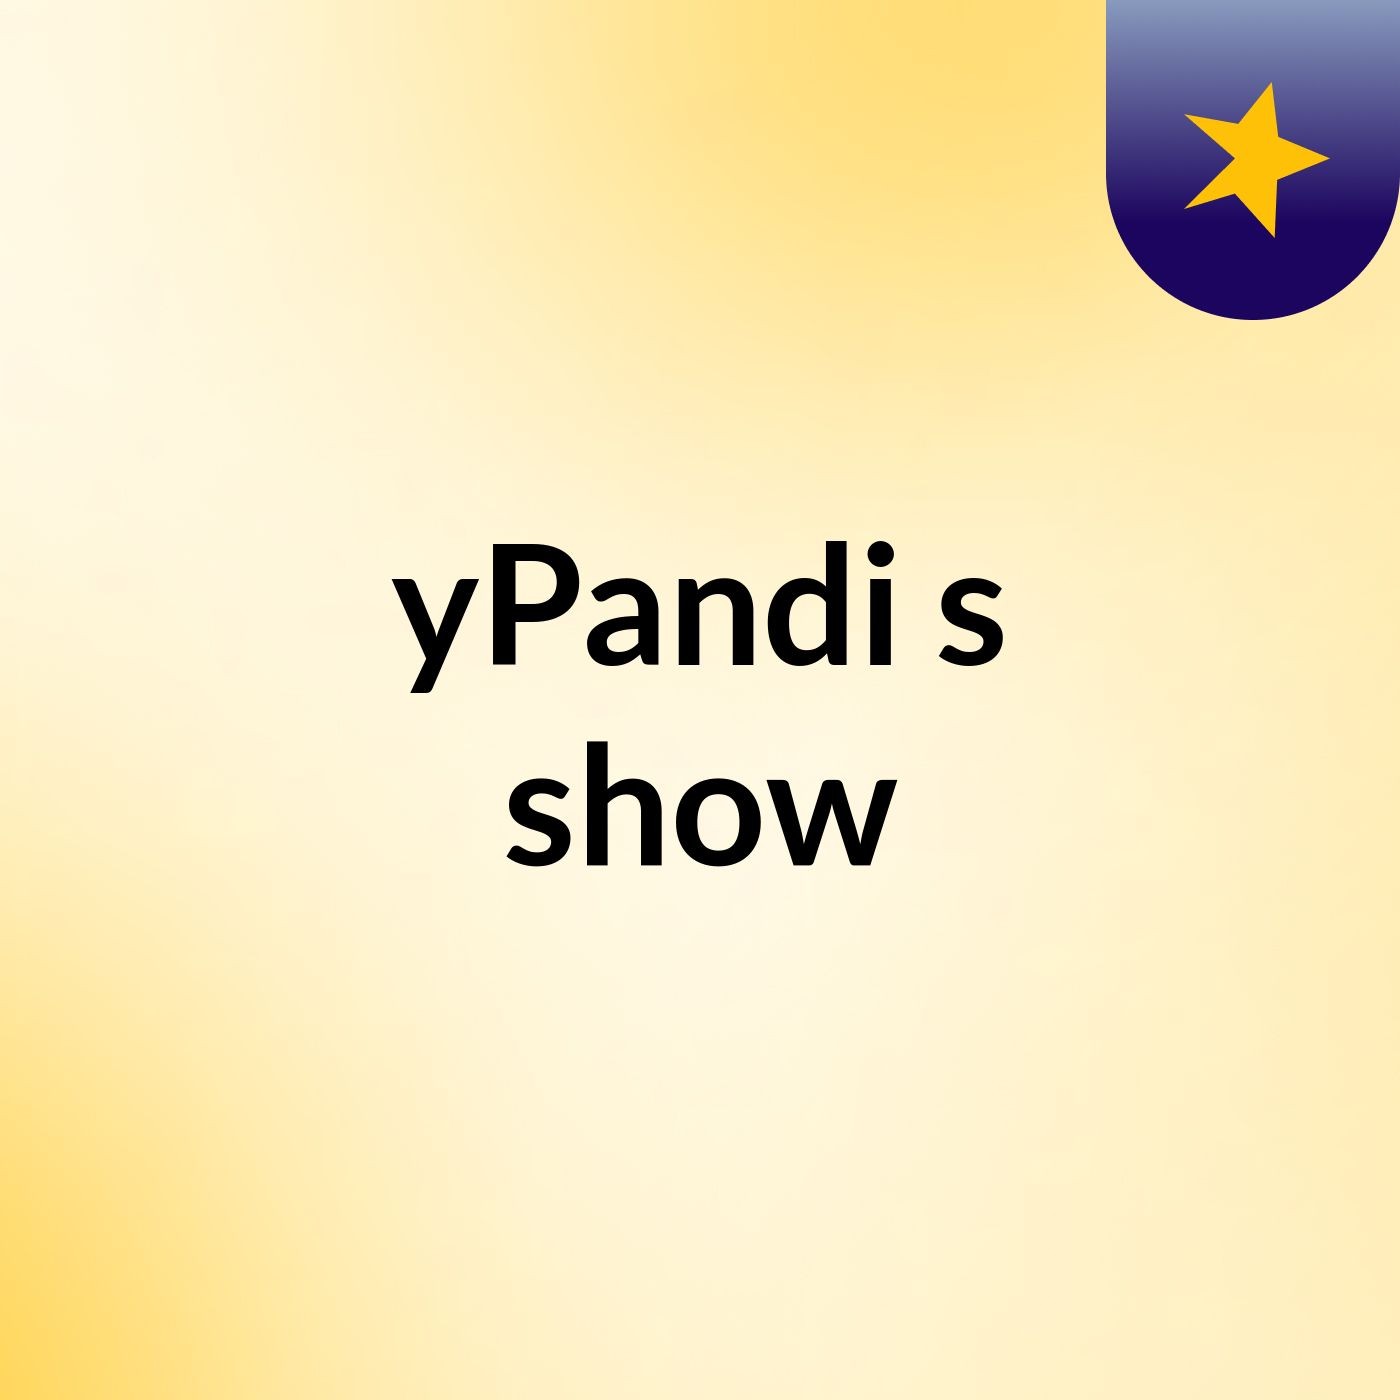 yPandi's show